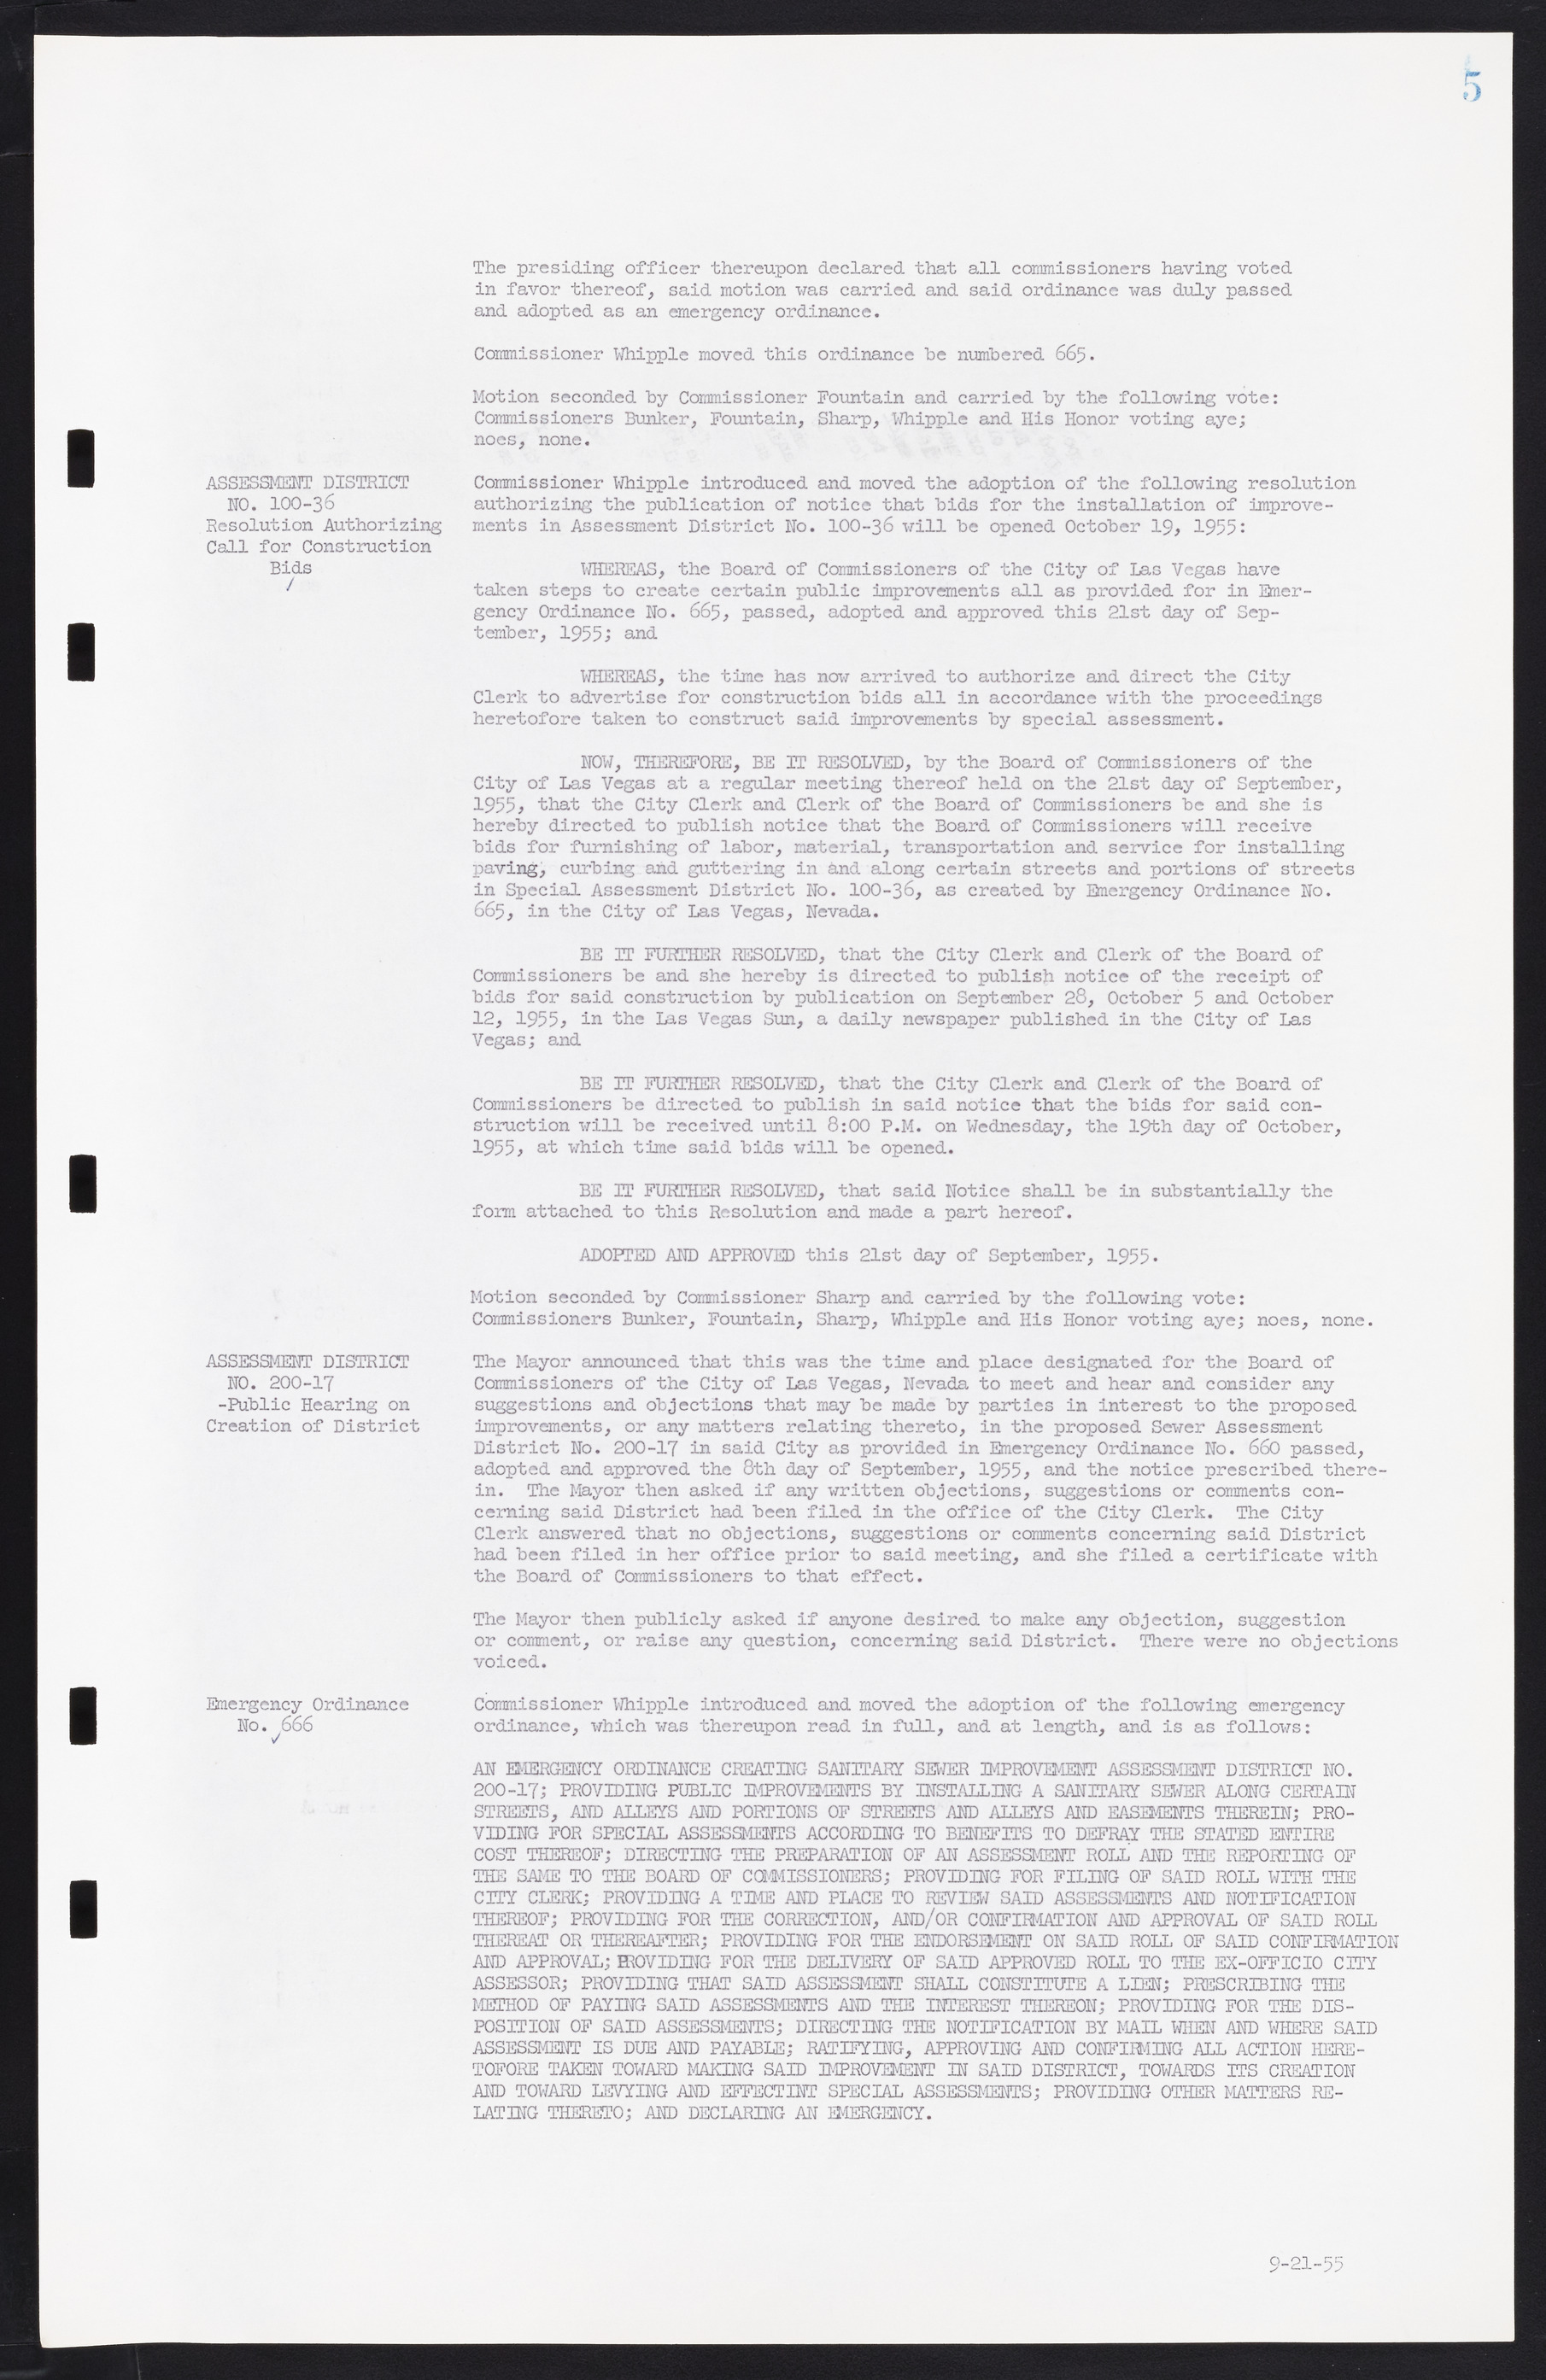 Las Vegas City Commission Minutes, September 21, 1955 to November 20, 1957, lvc000010-11